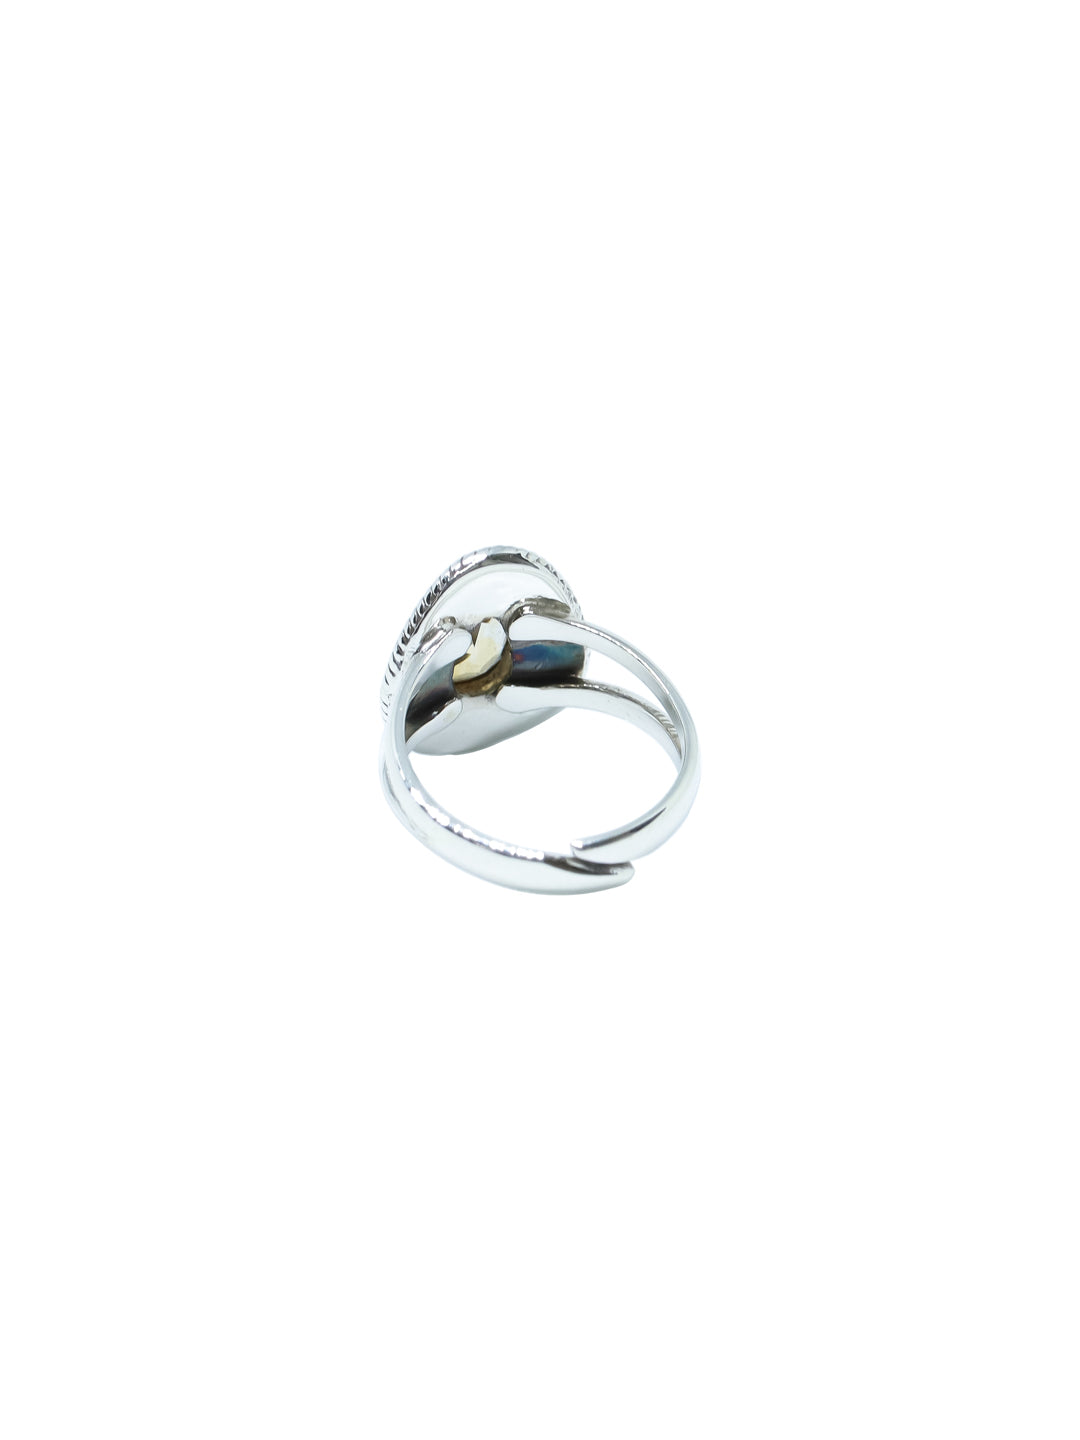 Silver Citrine Stone Ring